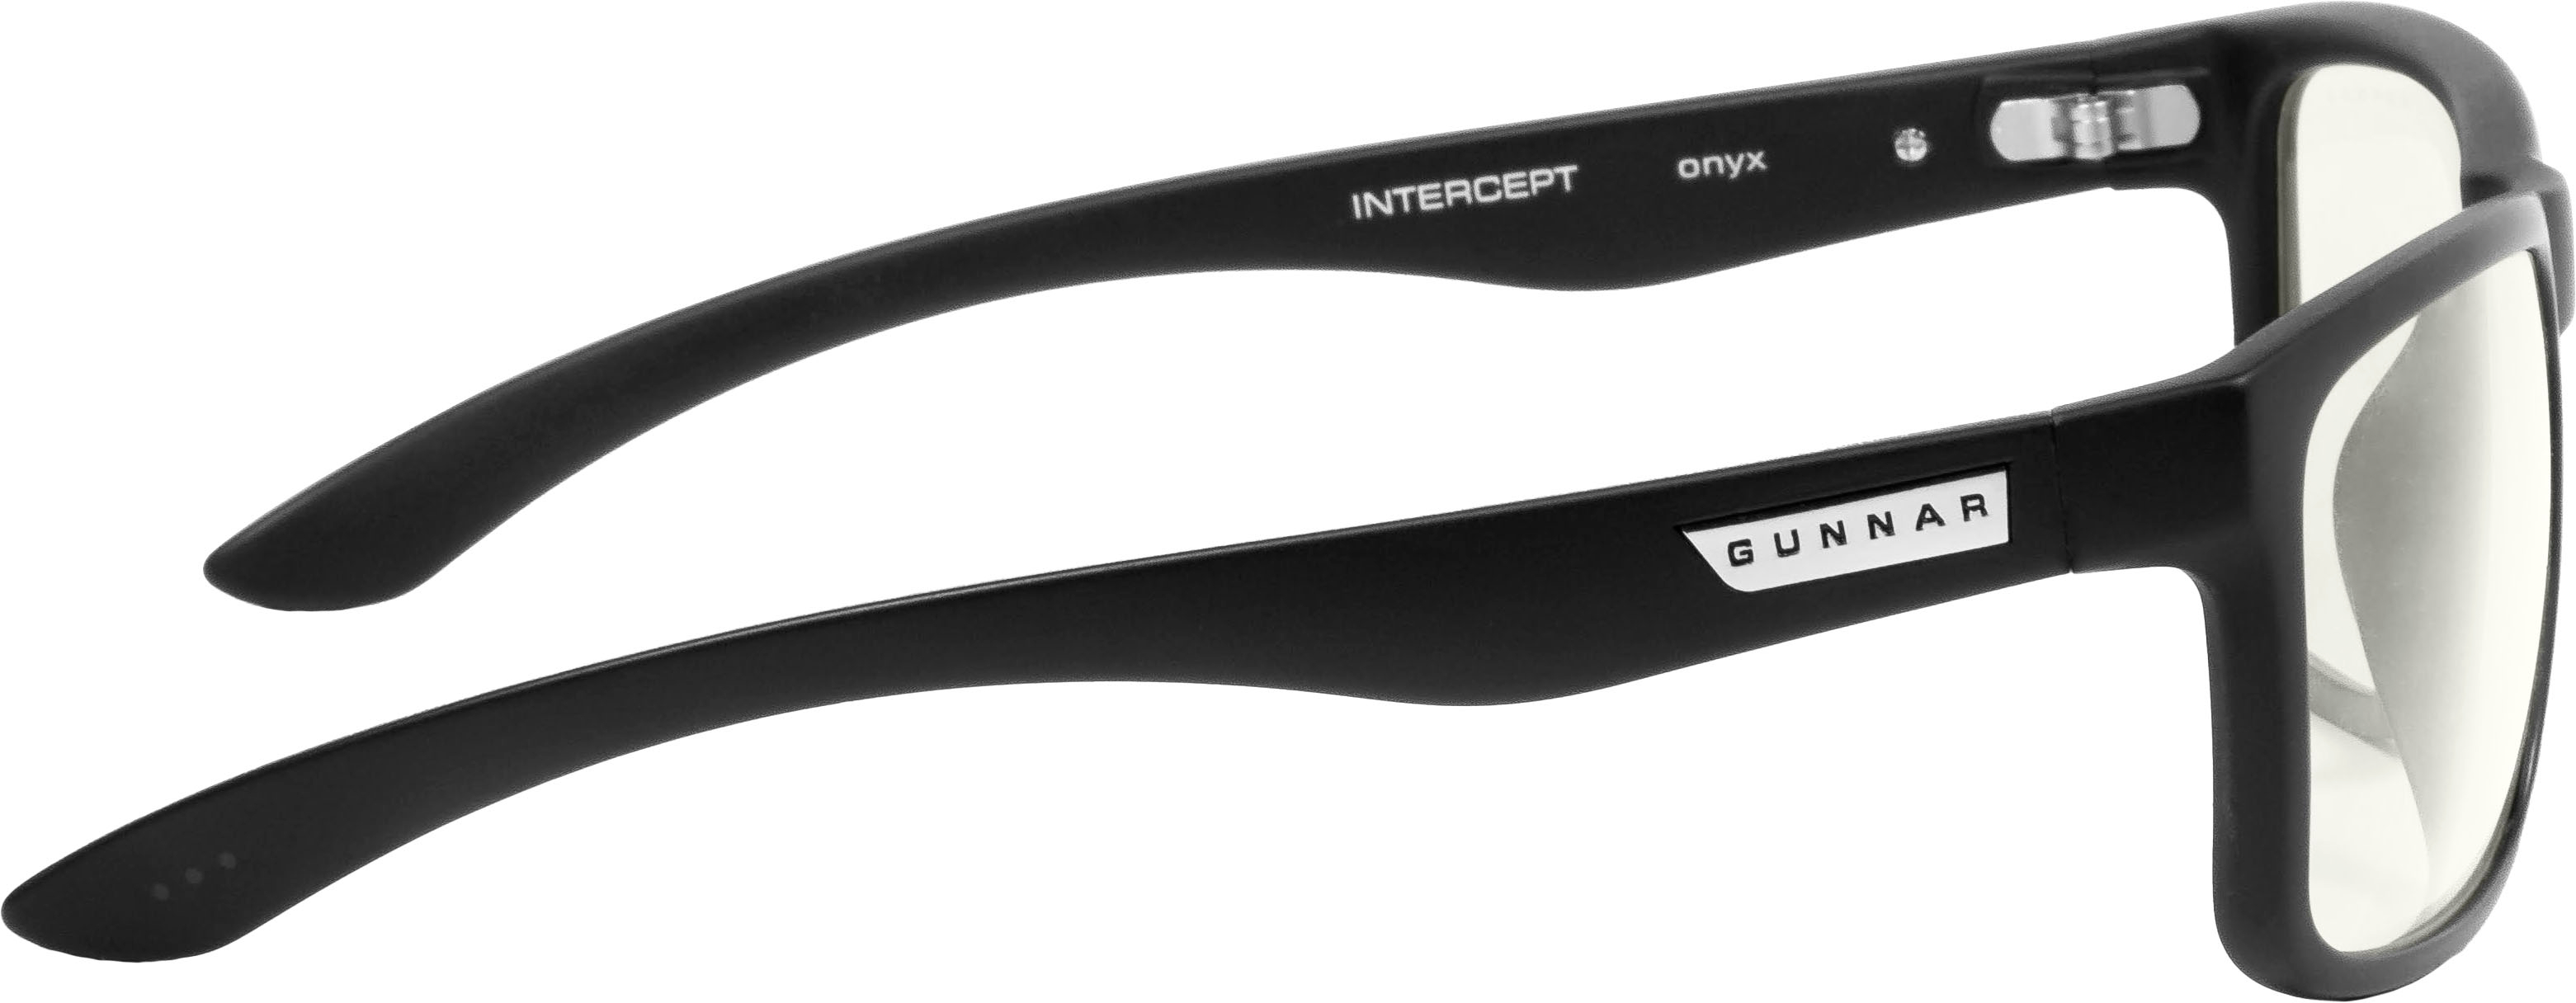 Left View: GUNNAR - Blue Light Gaming & Computer Glasses - Intercept - Onyx